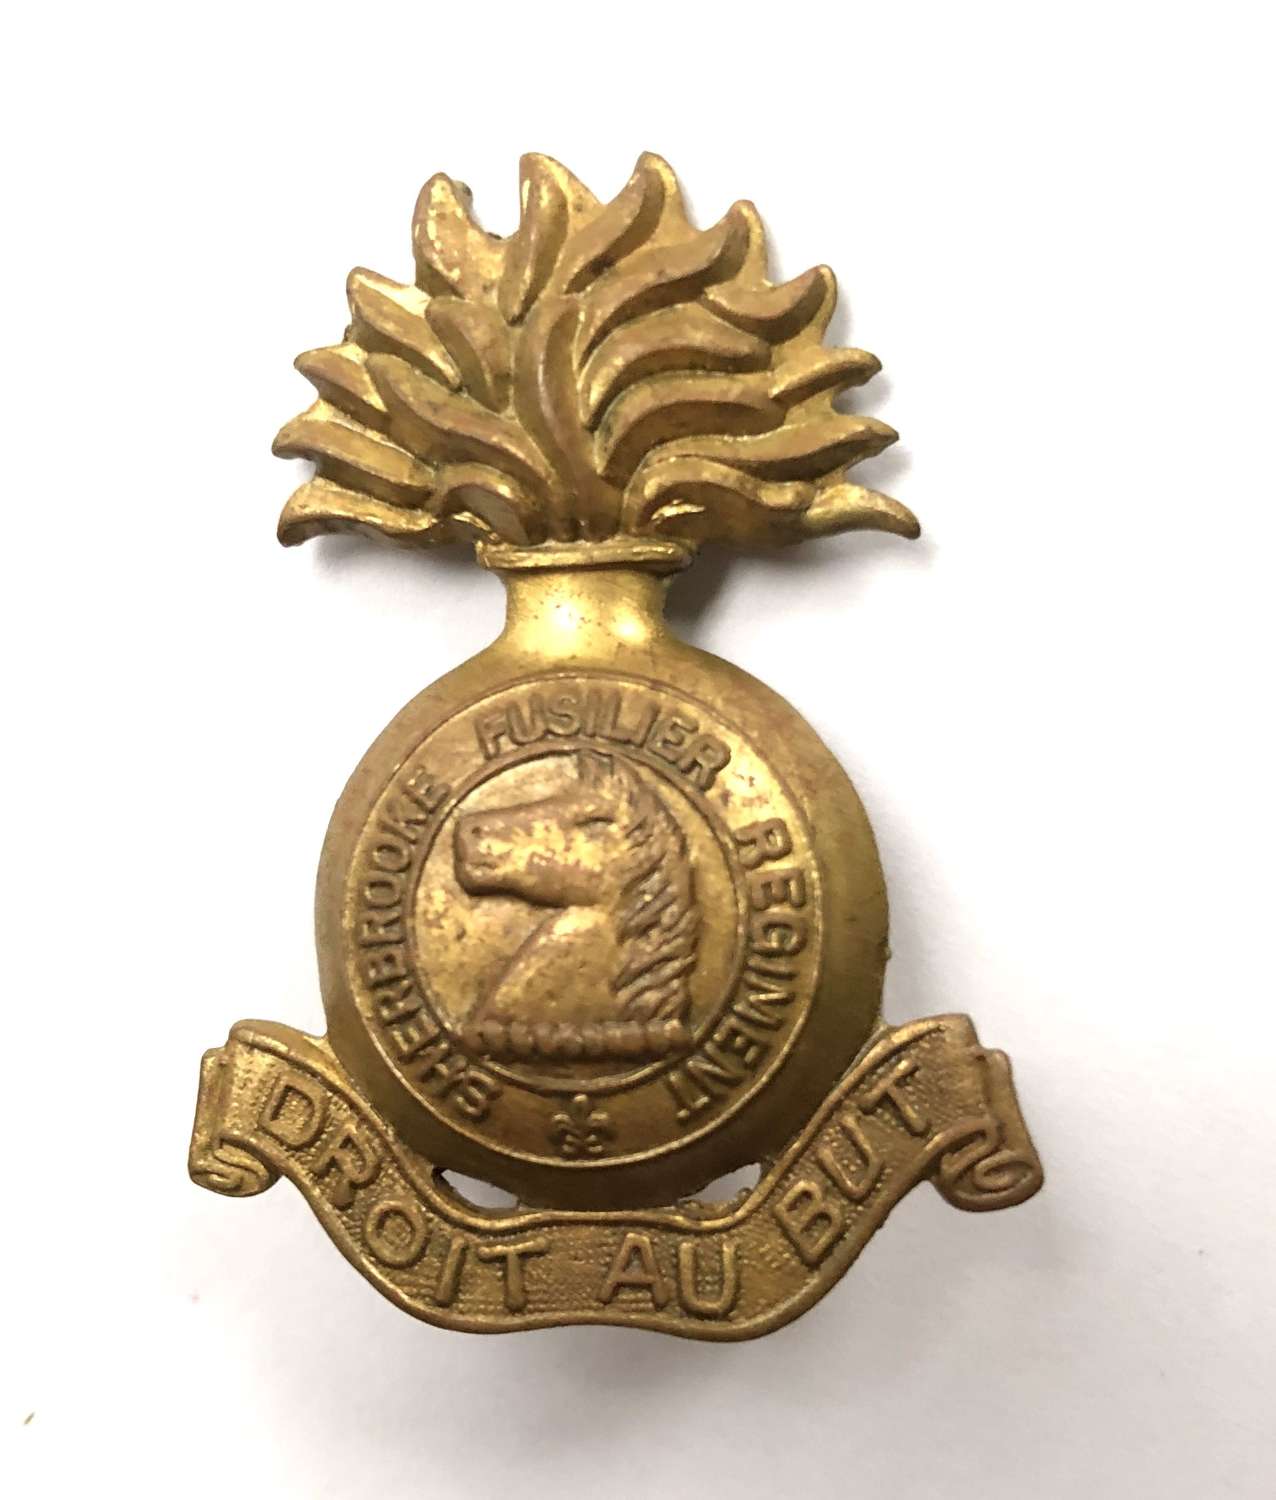 Canadian Sherbrooke Fusilier Regiment CASF WW2 cap badge